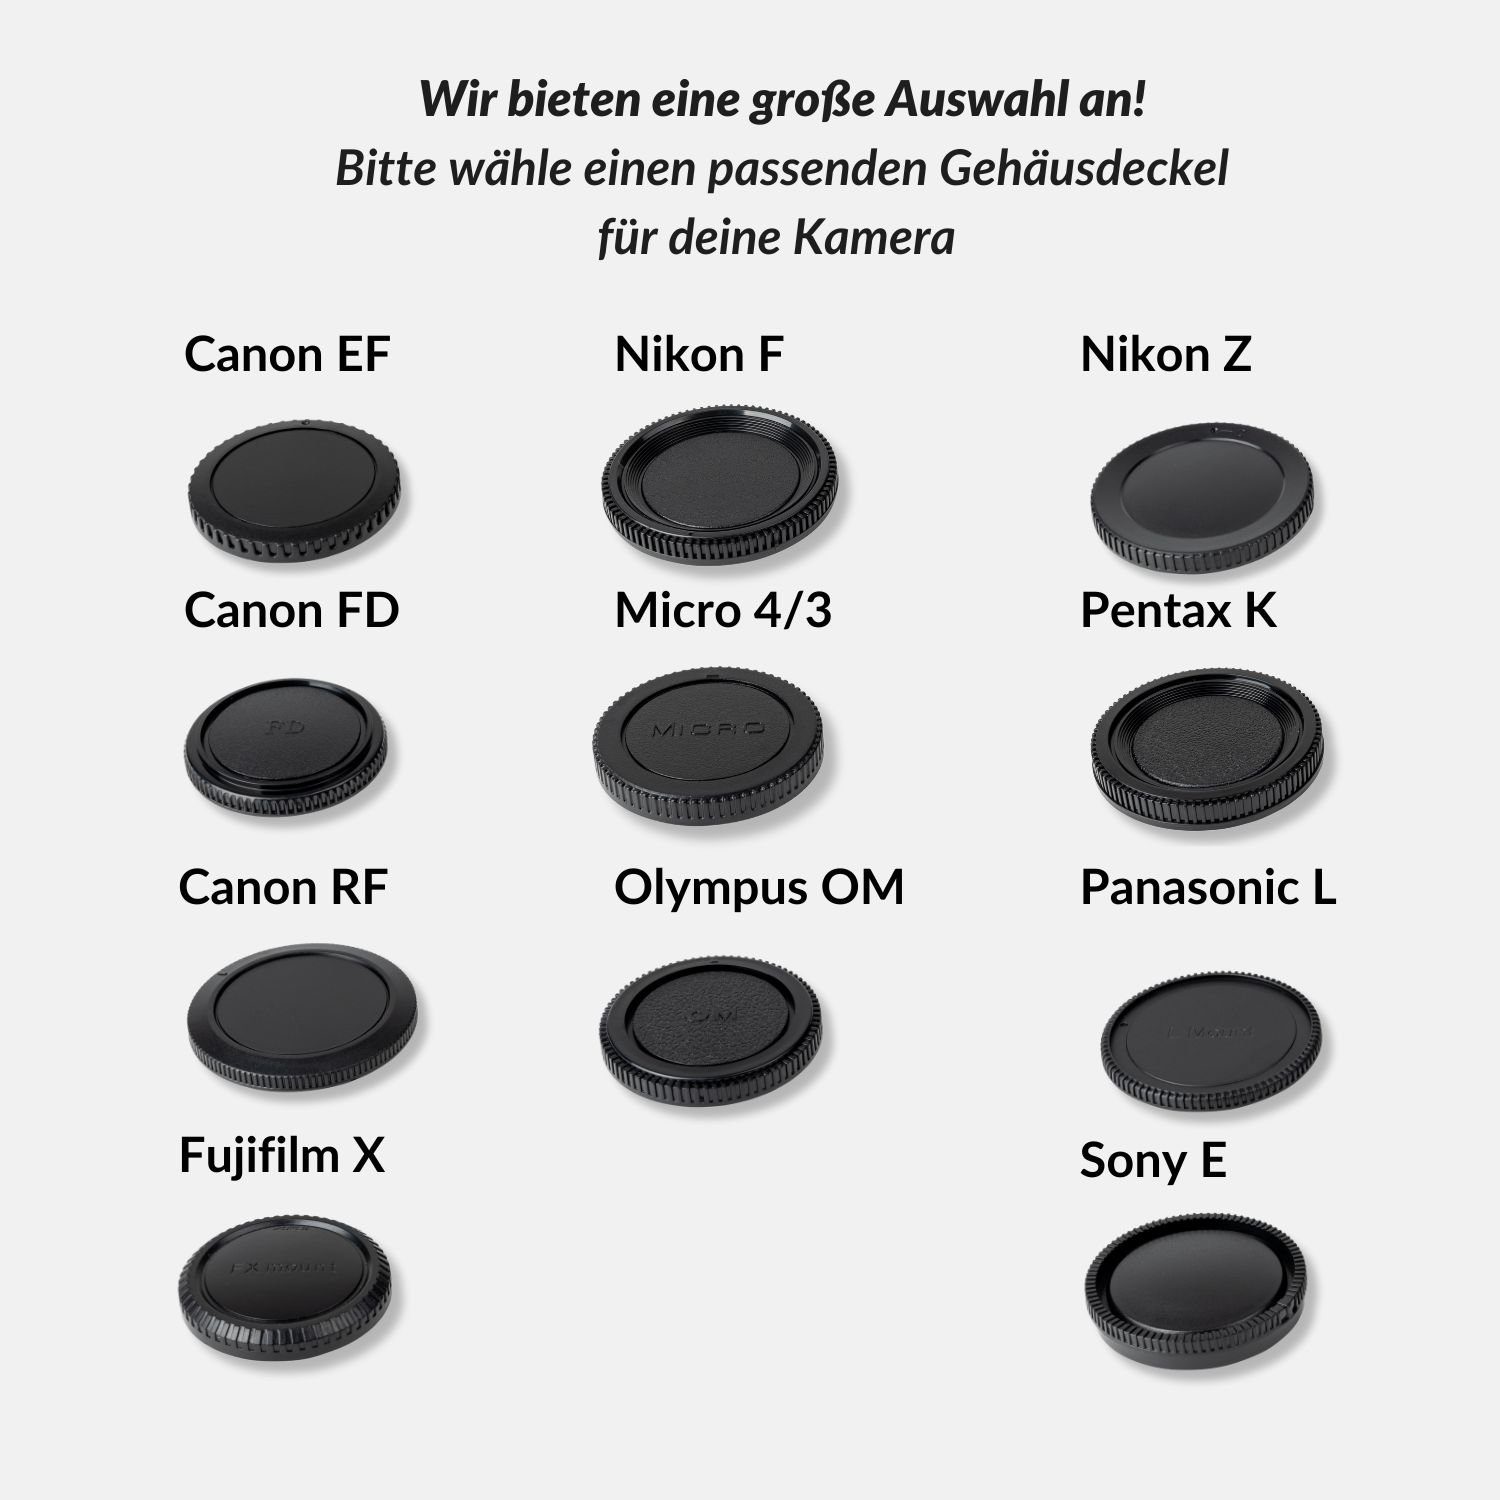 Body DSLR, Z-Bajonett, Cap, für Lens-Aid Systemkamera Gehäusedeckel Nikon